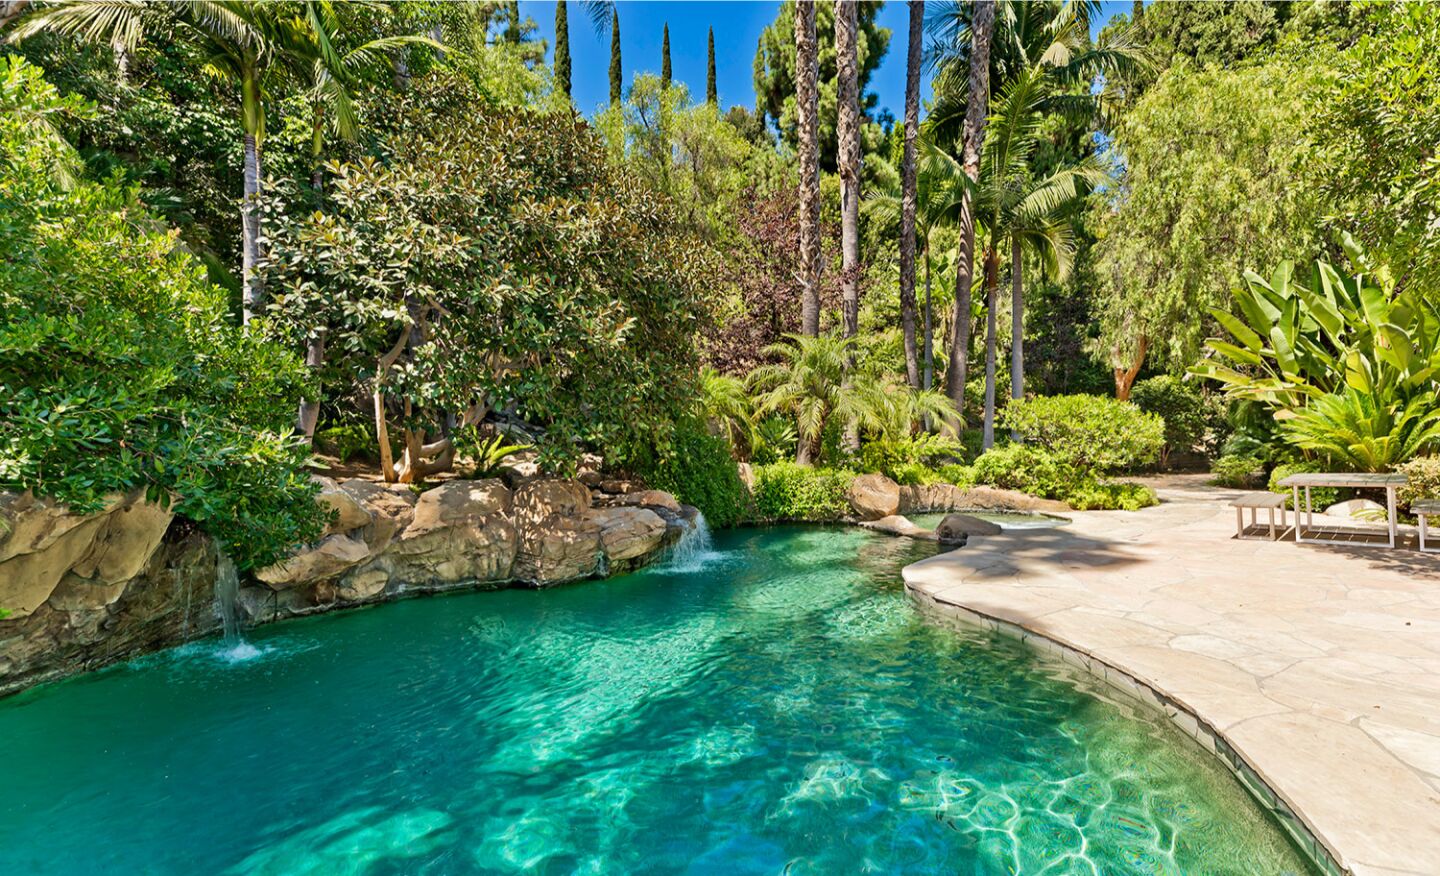 The lagoon-style swimming pool.